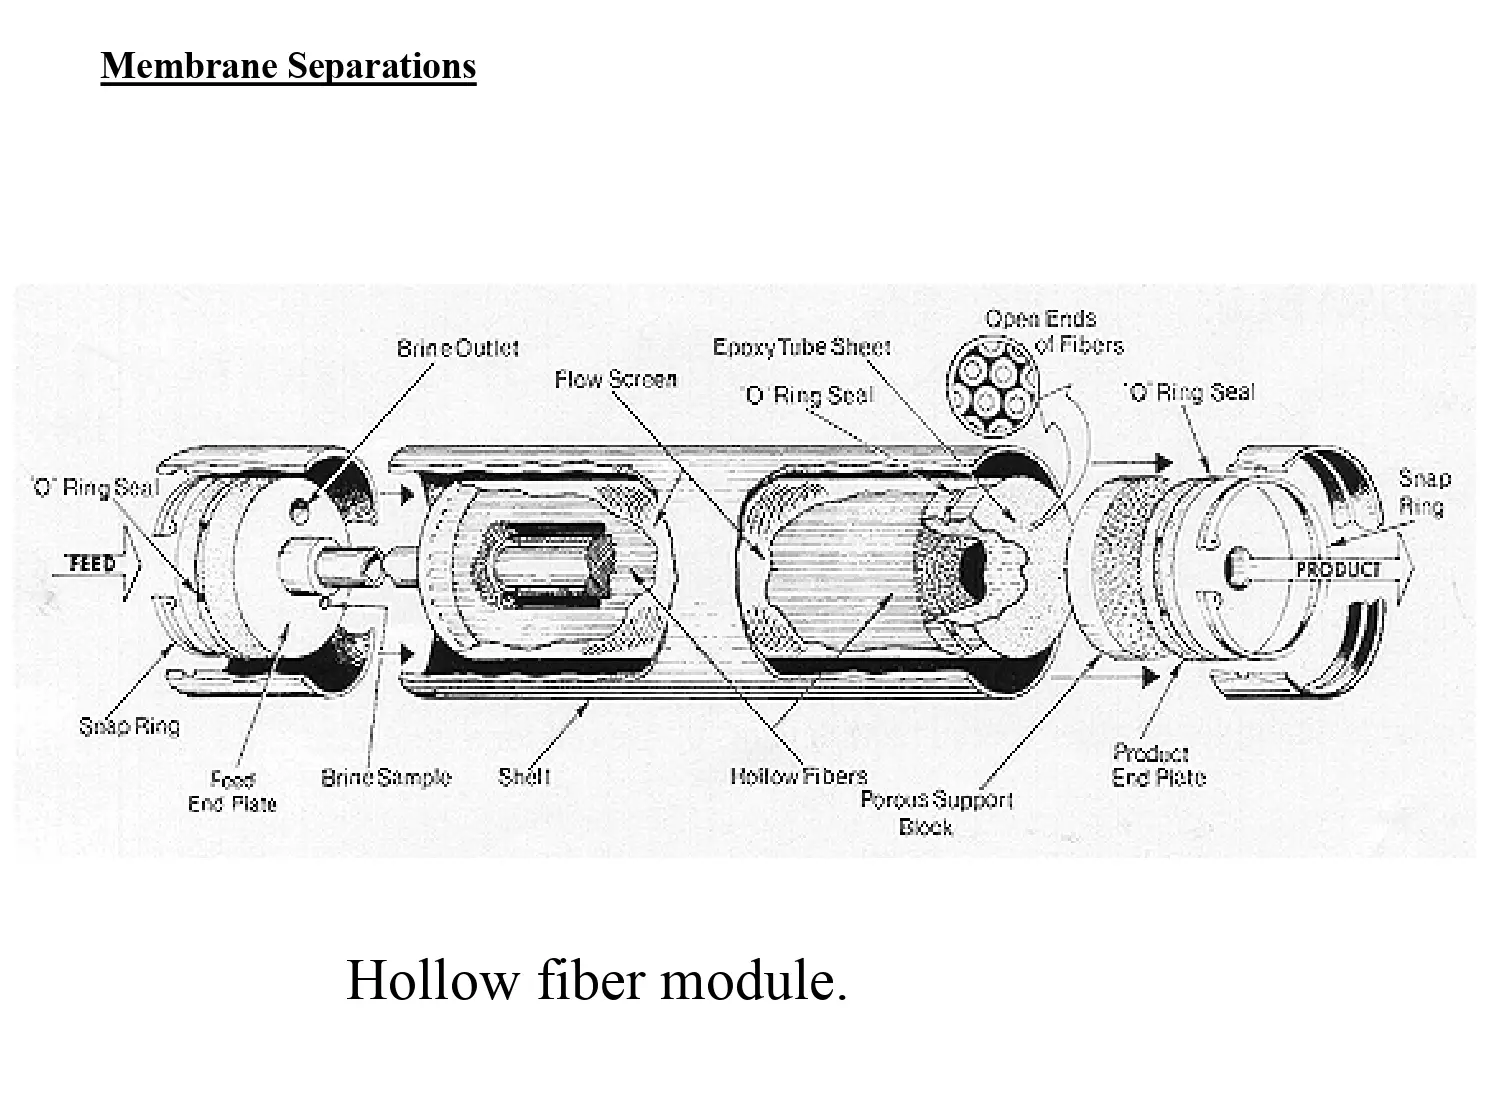 Membrane Separations: Hollow Fiber Module